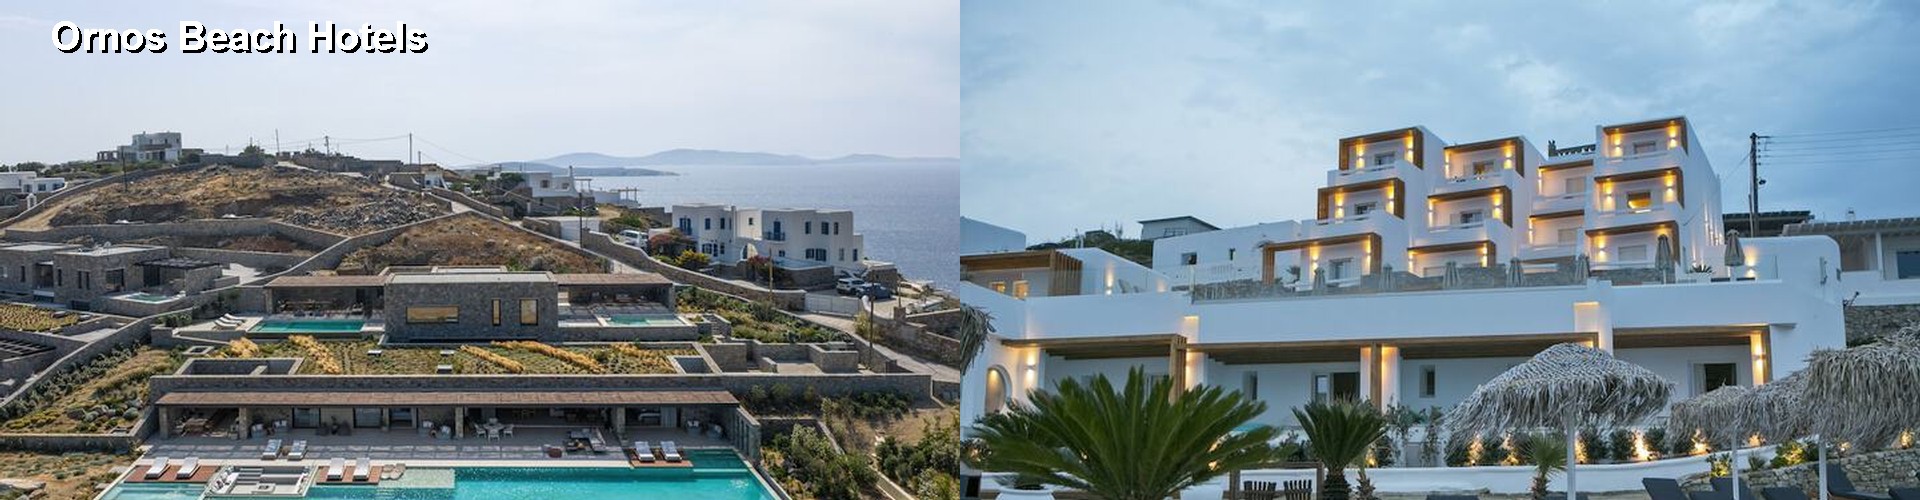 5 Best Hotels near Ornos Beach